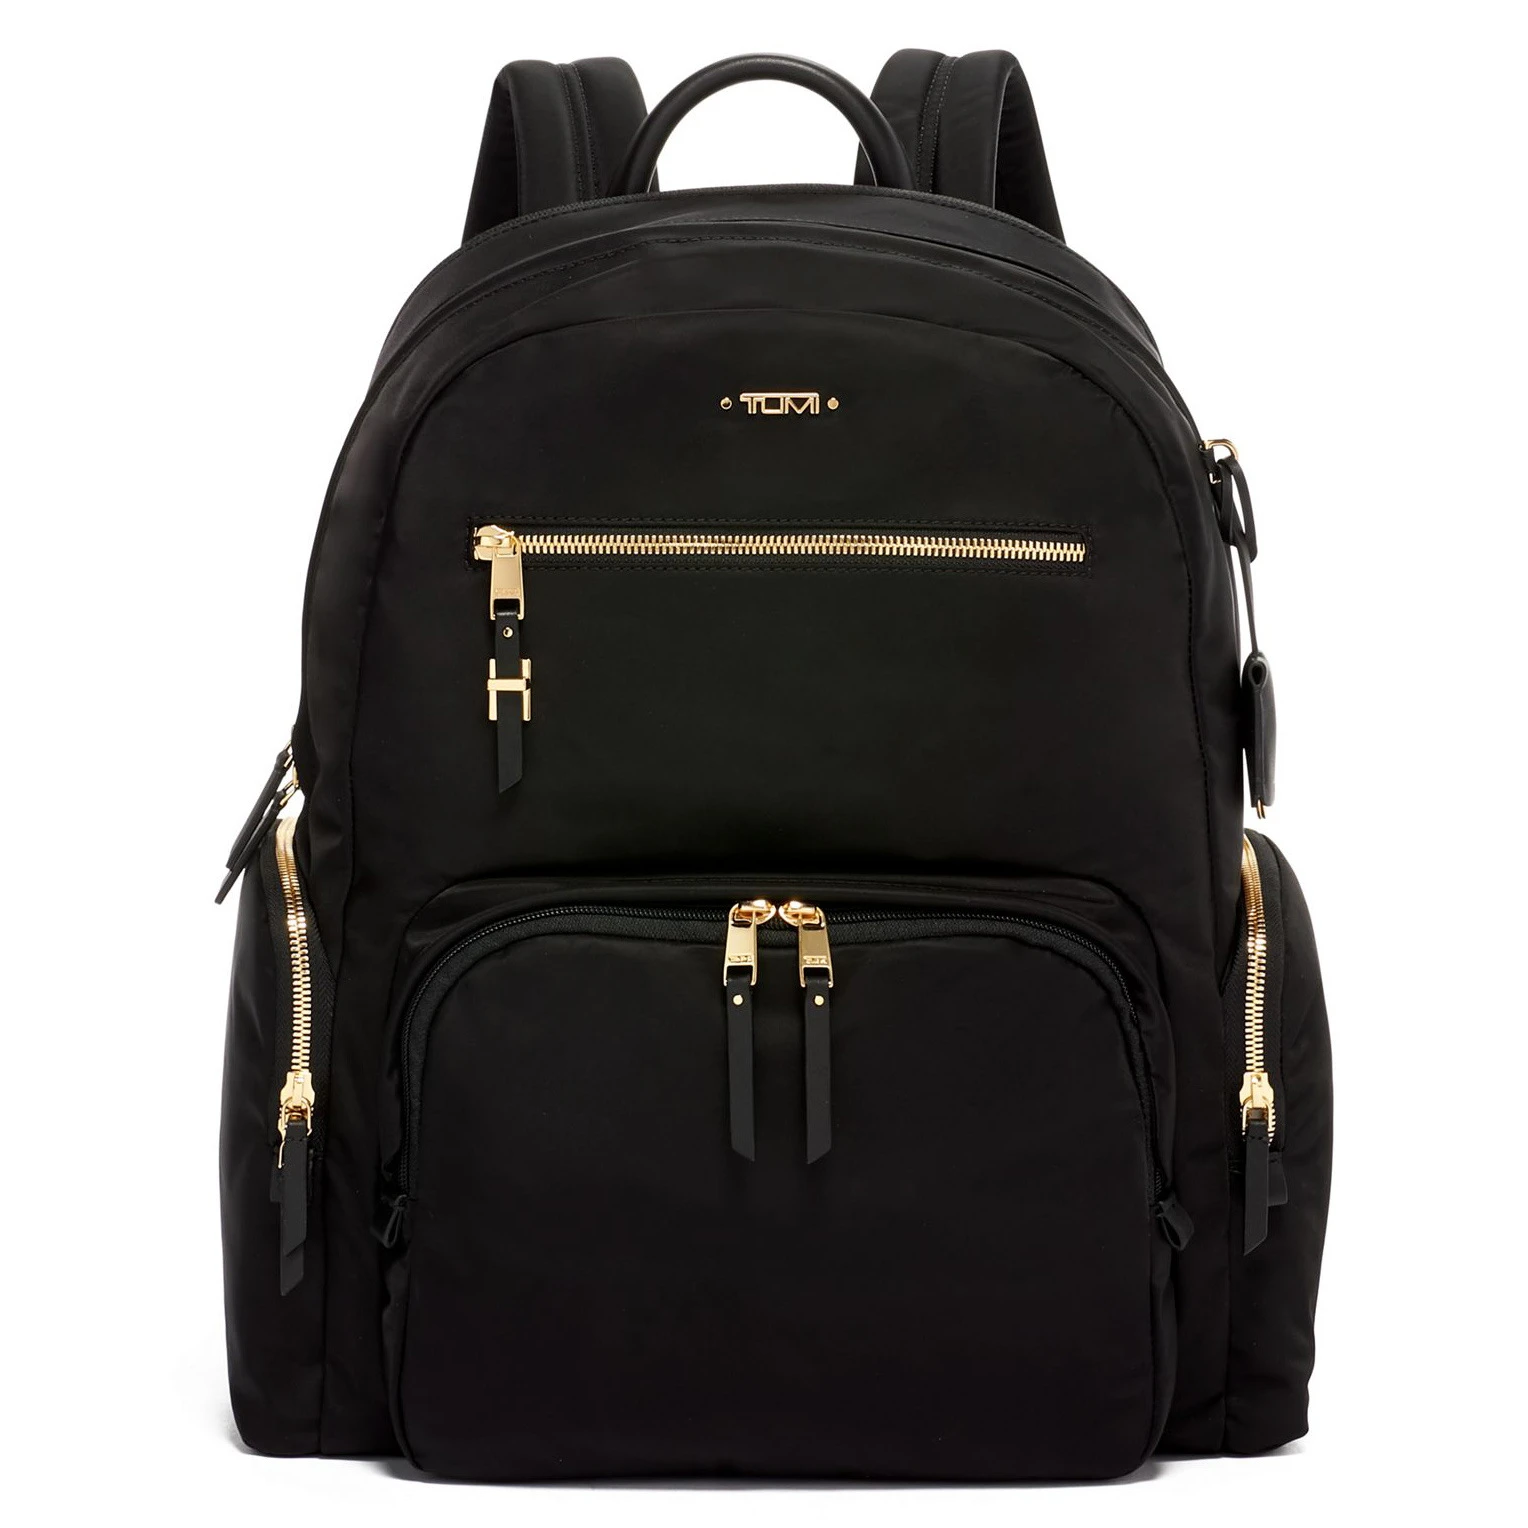 96300 shoulder bag nylon backpack fa lshionadies travel bag large capacity computer bag most stylish backpacks